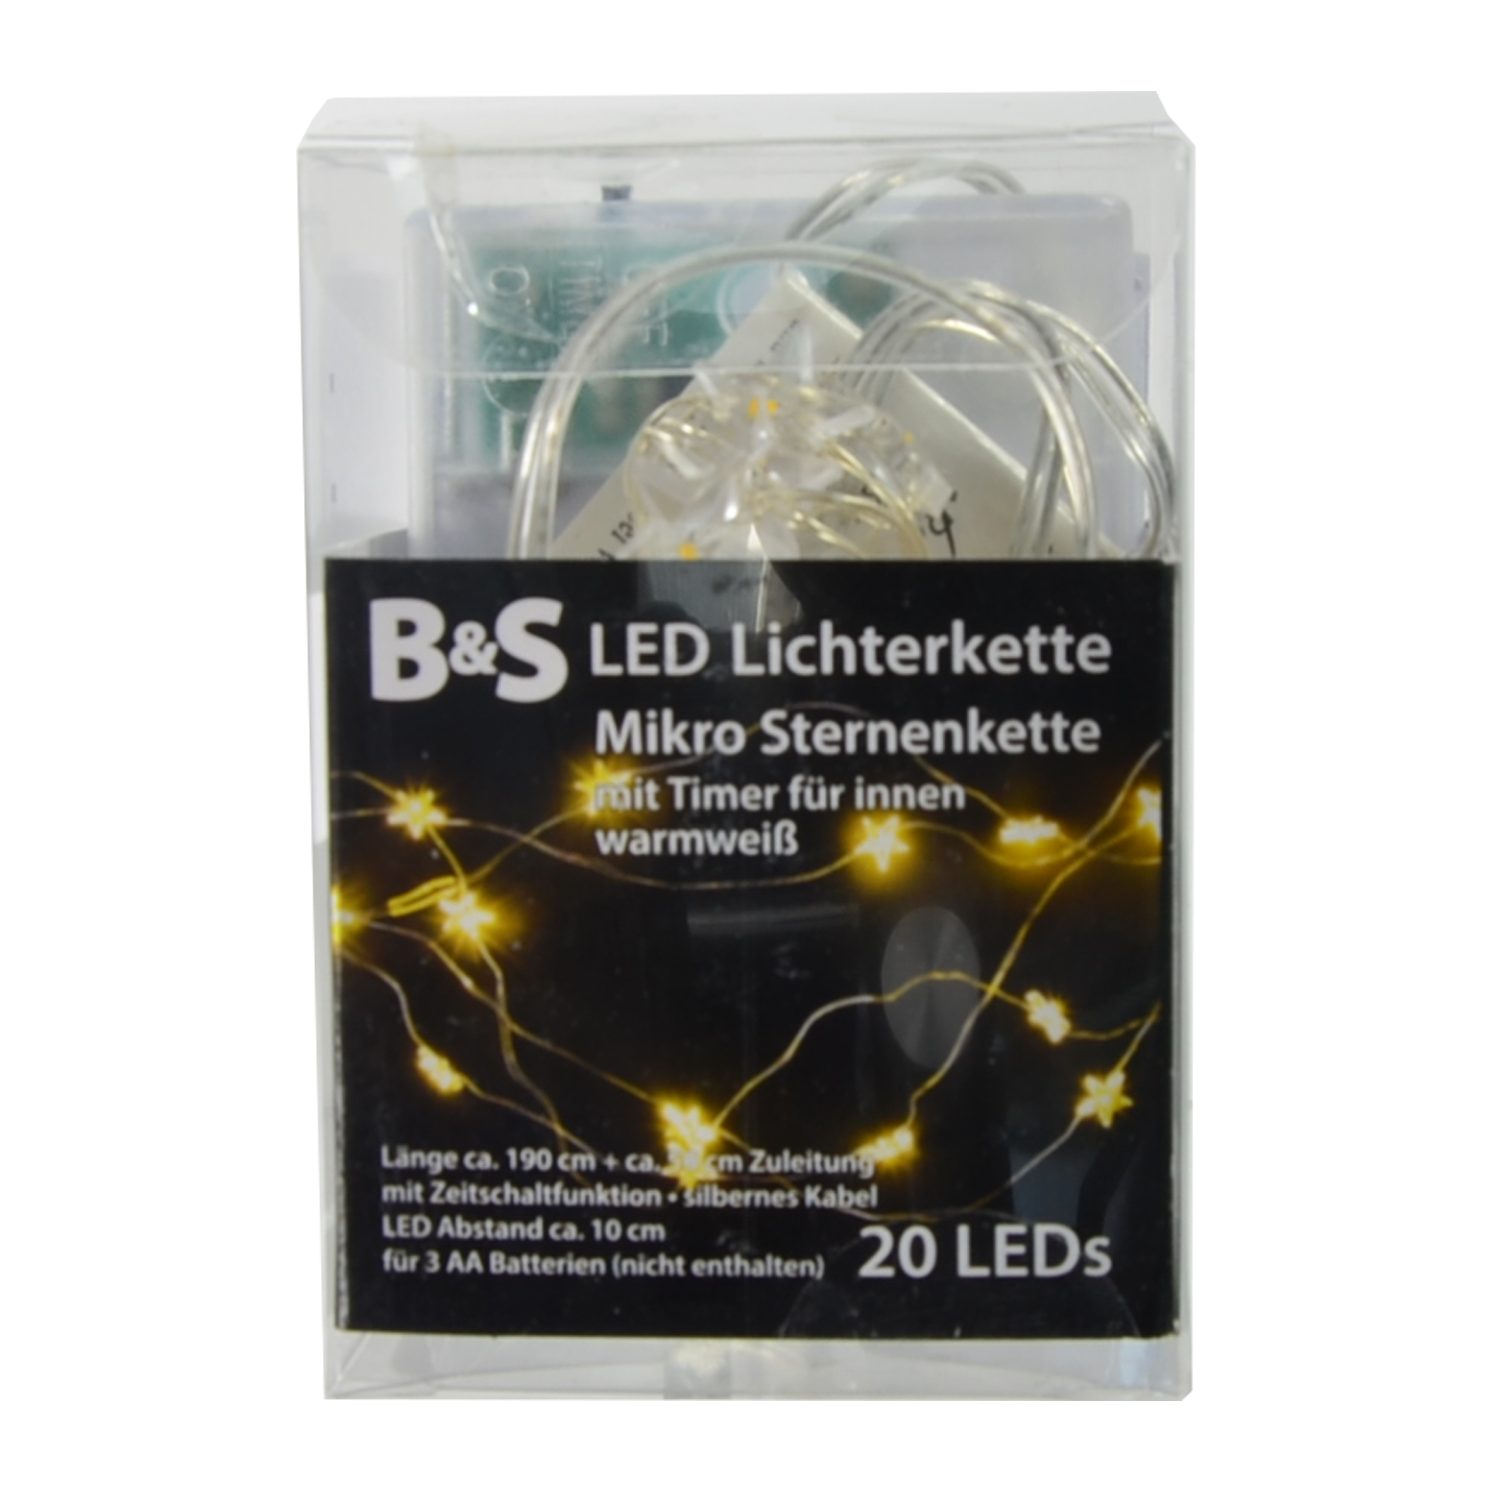 B&S Batterie LEDs warmweiß Innenbereich LED-Lichterkette Mikro Sternen LED 20 Lichterkette